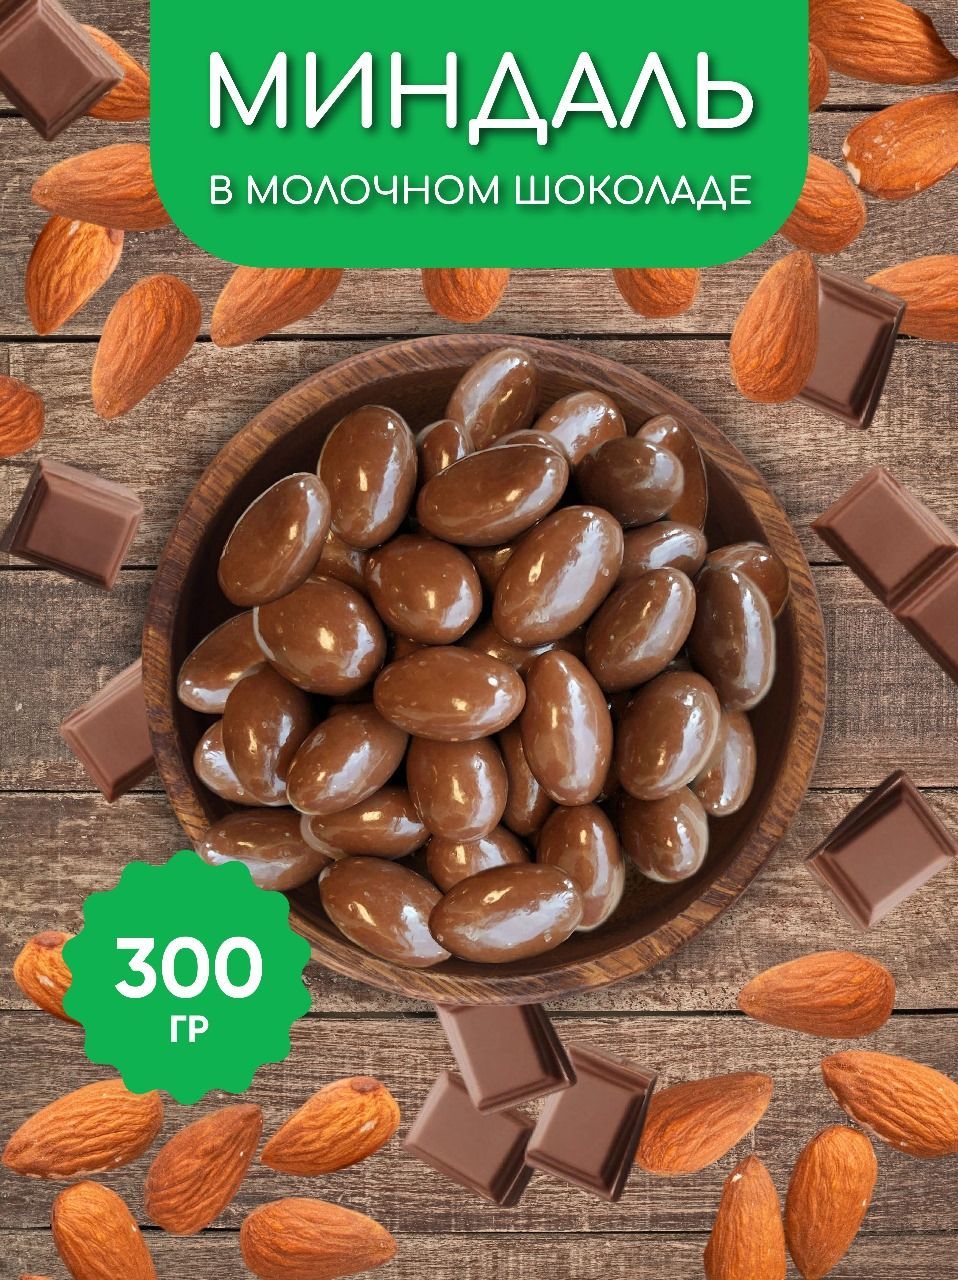 300 шоколада. Шоколады amavel.